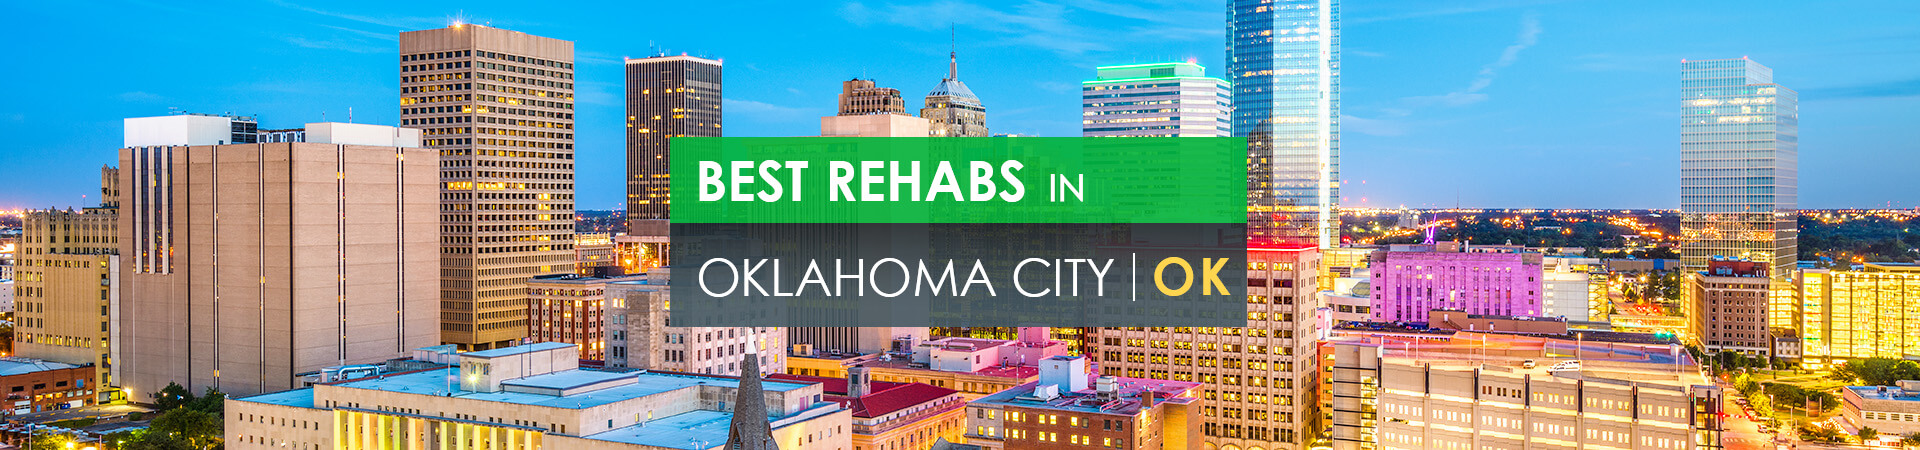 Best rehabs in Oklahoma City, OK